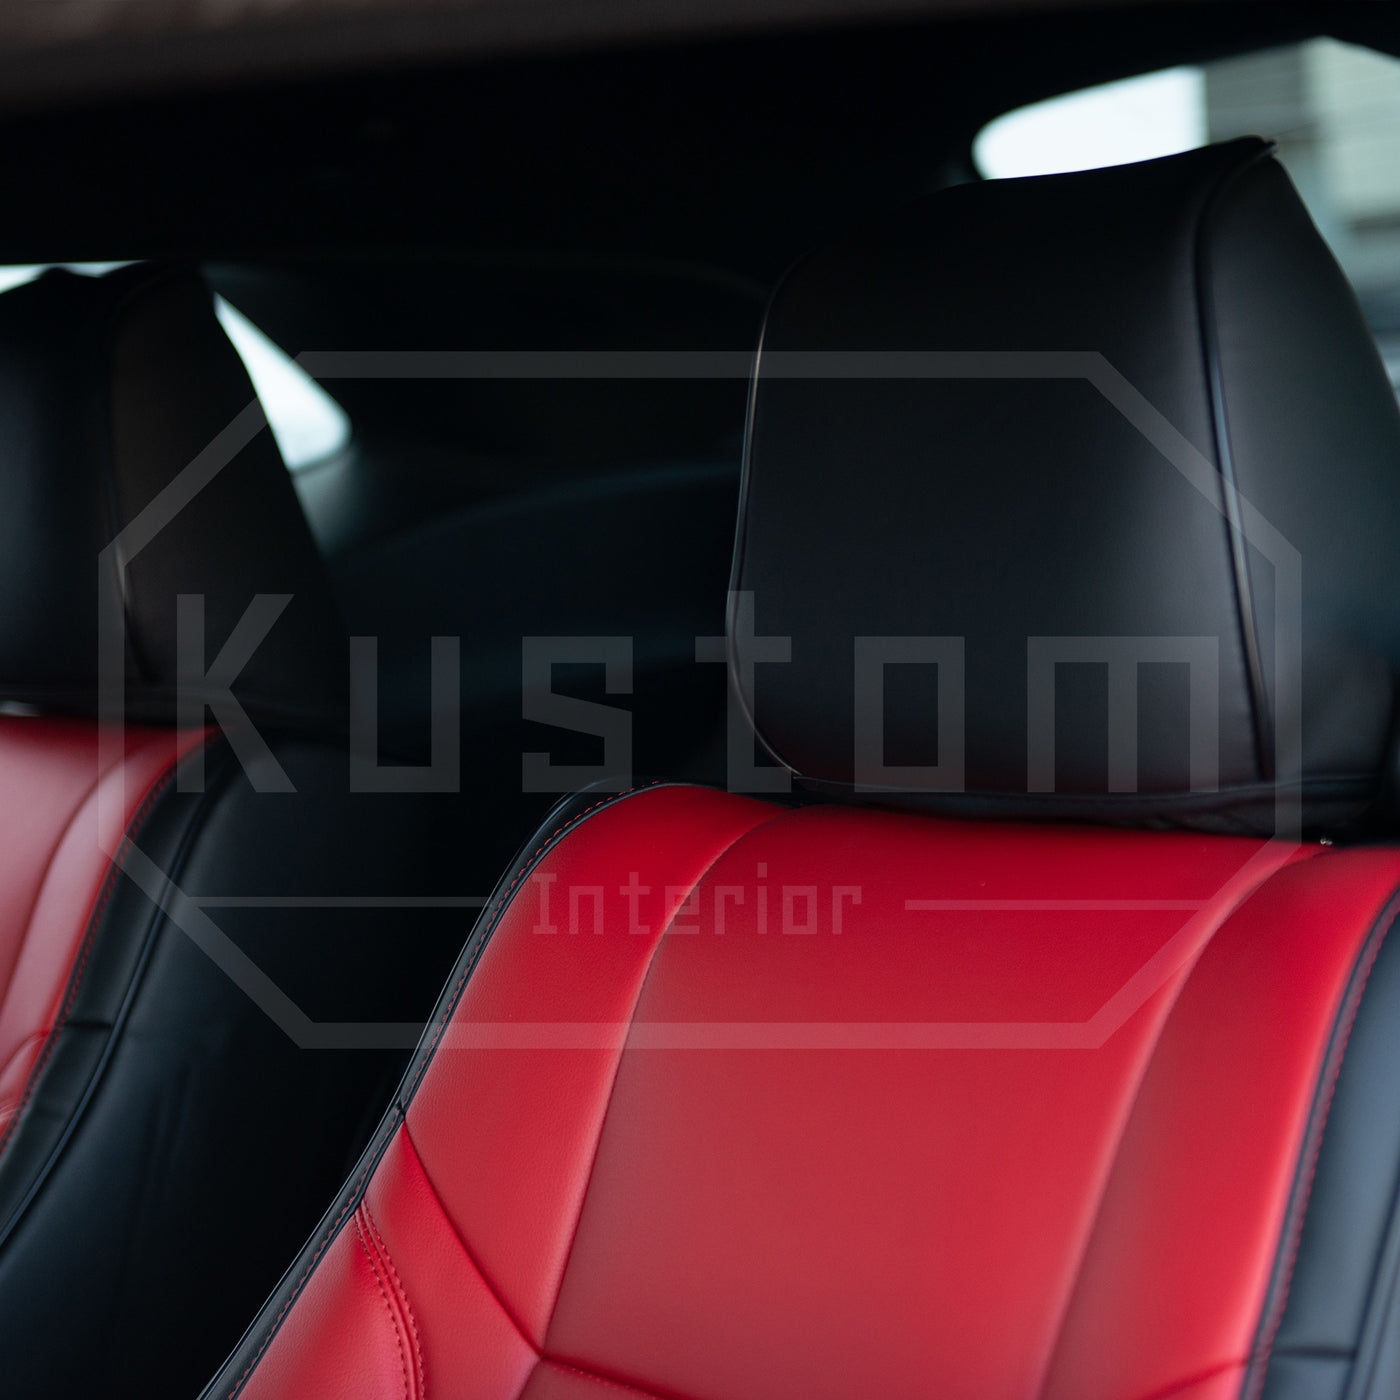 2015-21 Dodge Challenger Premium Custom Seat Covers (Sport Seat)